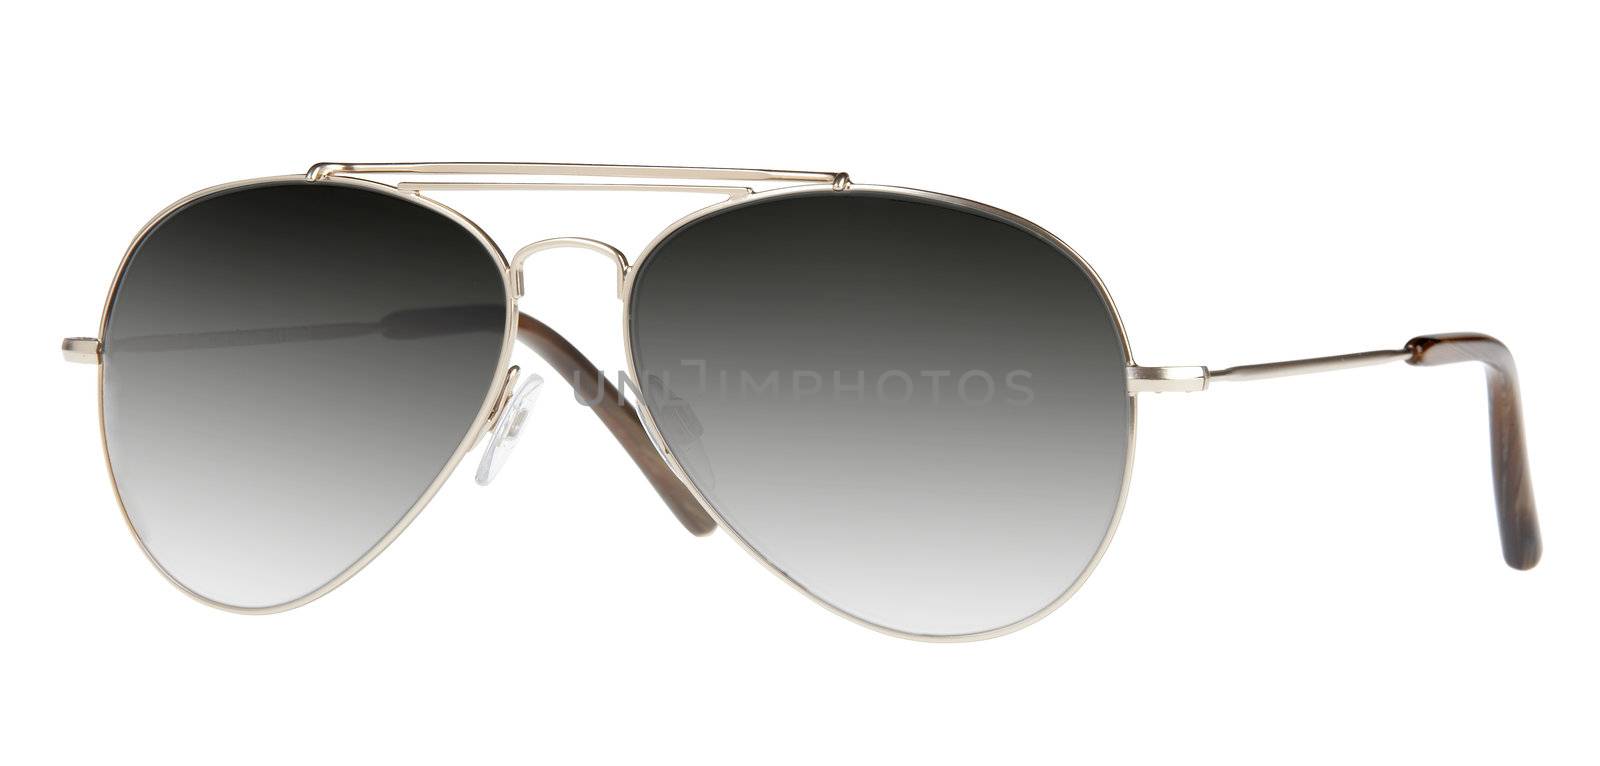 Mirrored aviator sunglasses isolated on white by ozaiachin